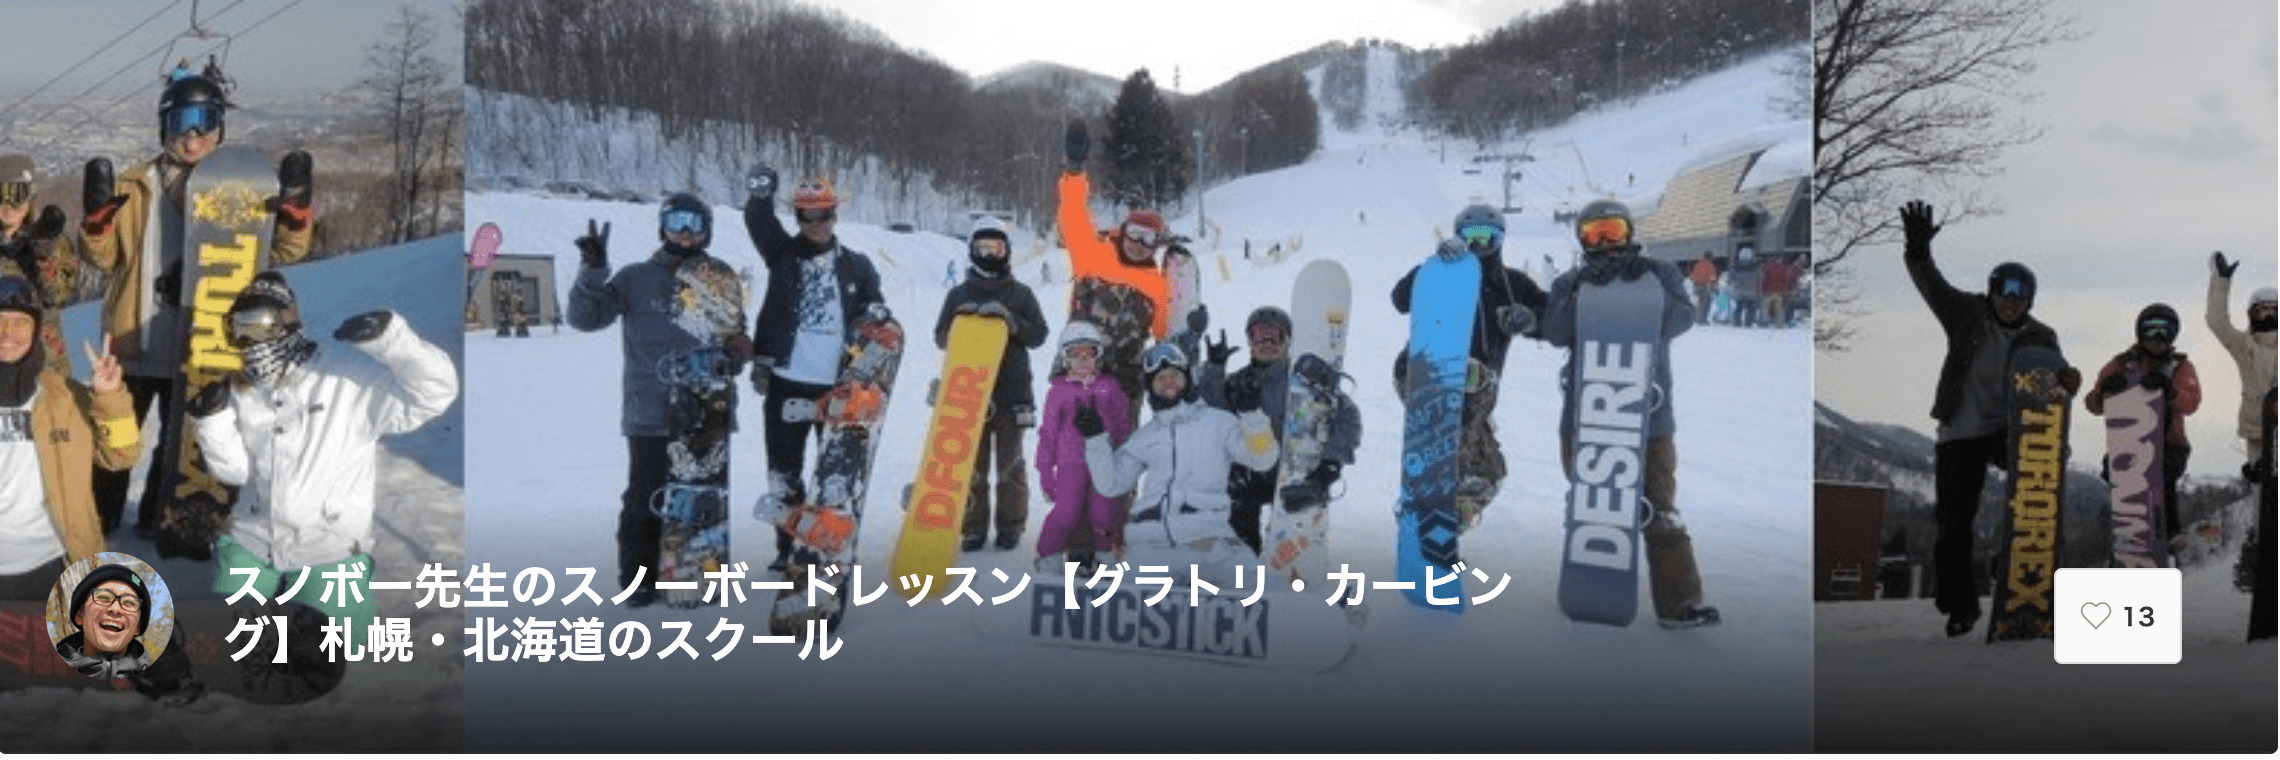 youtube_snowboard_lesson